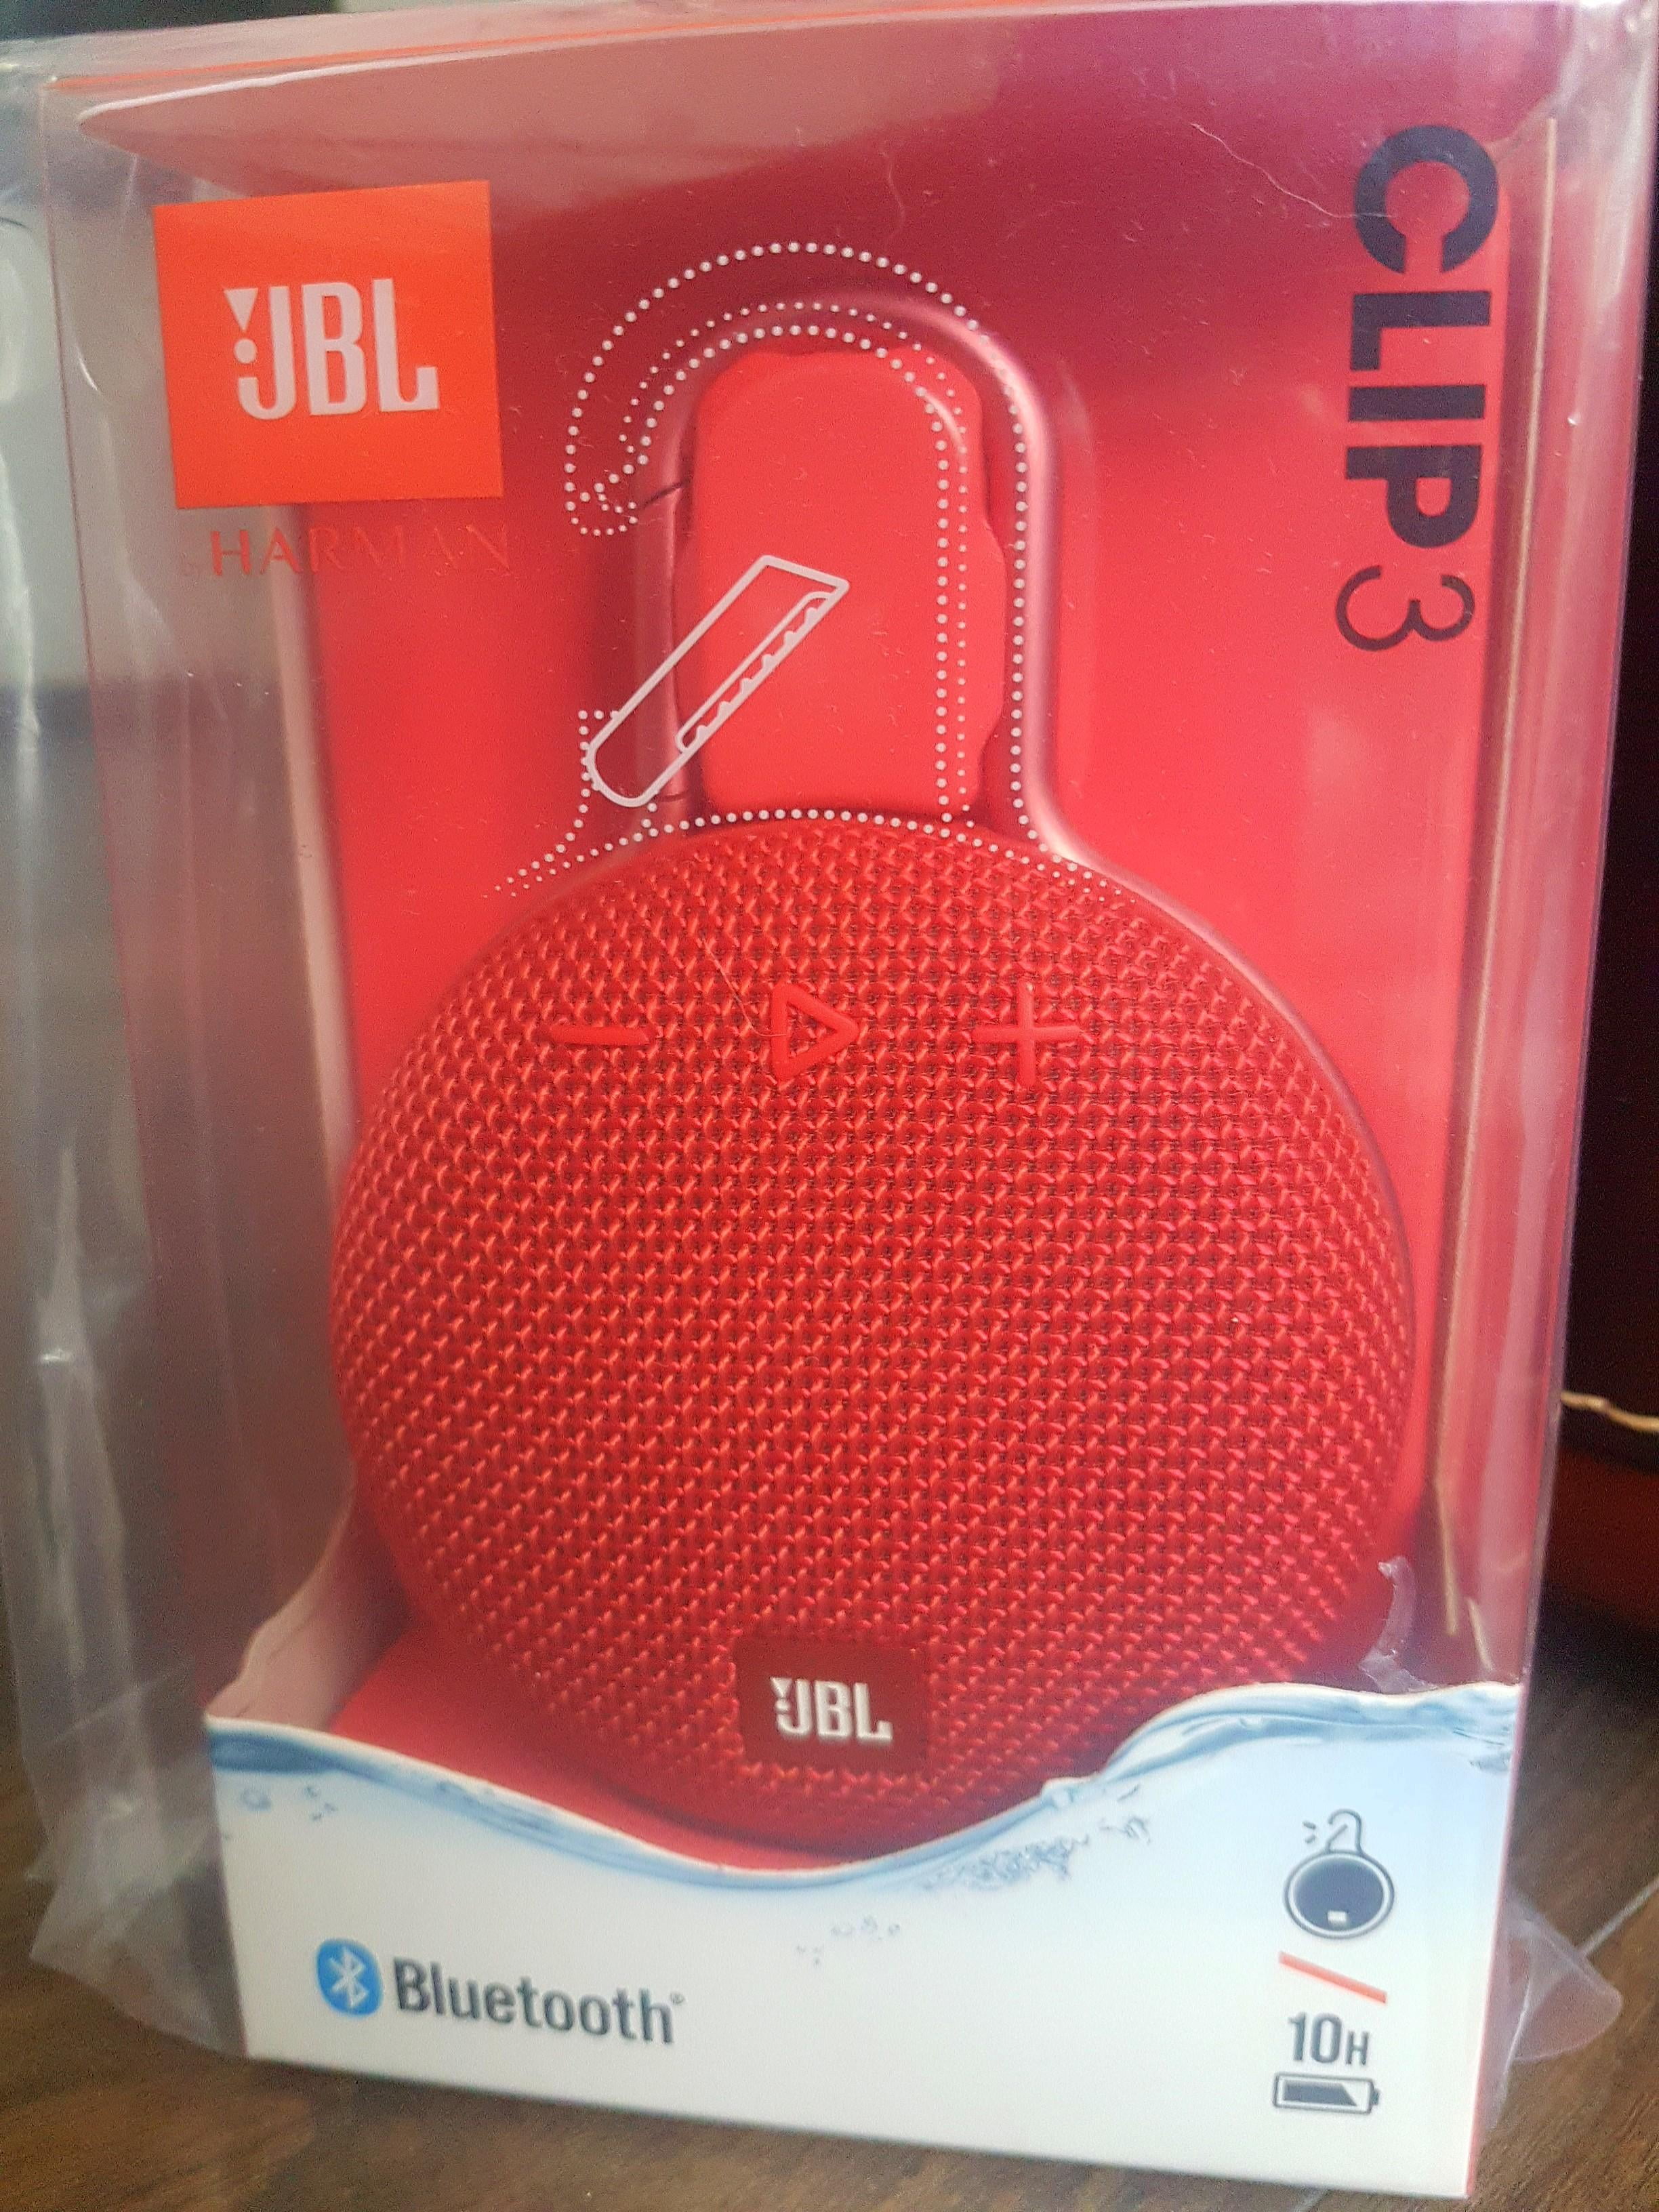 Executive Tech Accessories  JBL Clip 3 Portable Bluetooth Speaker 762